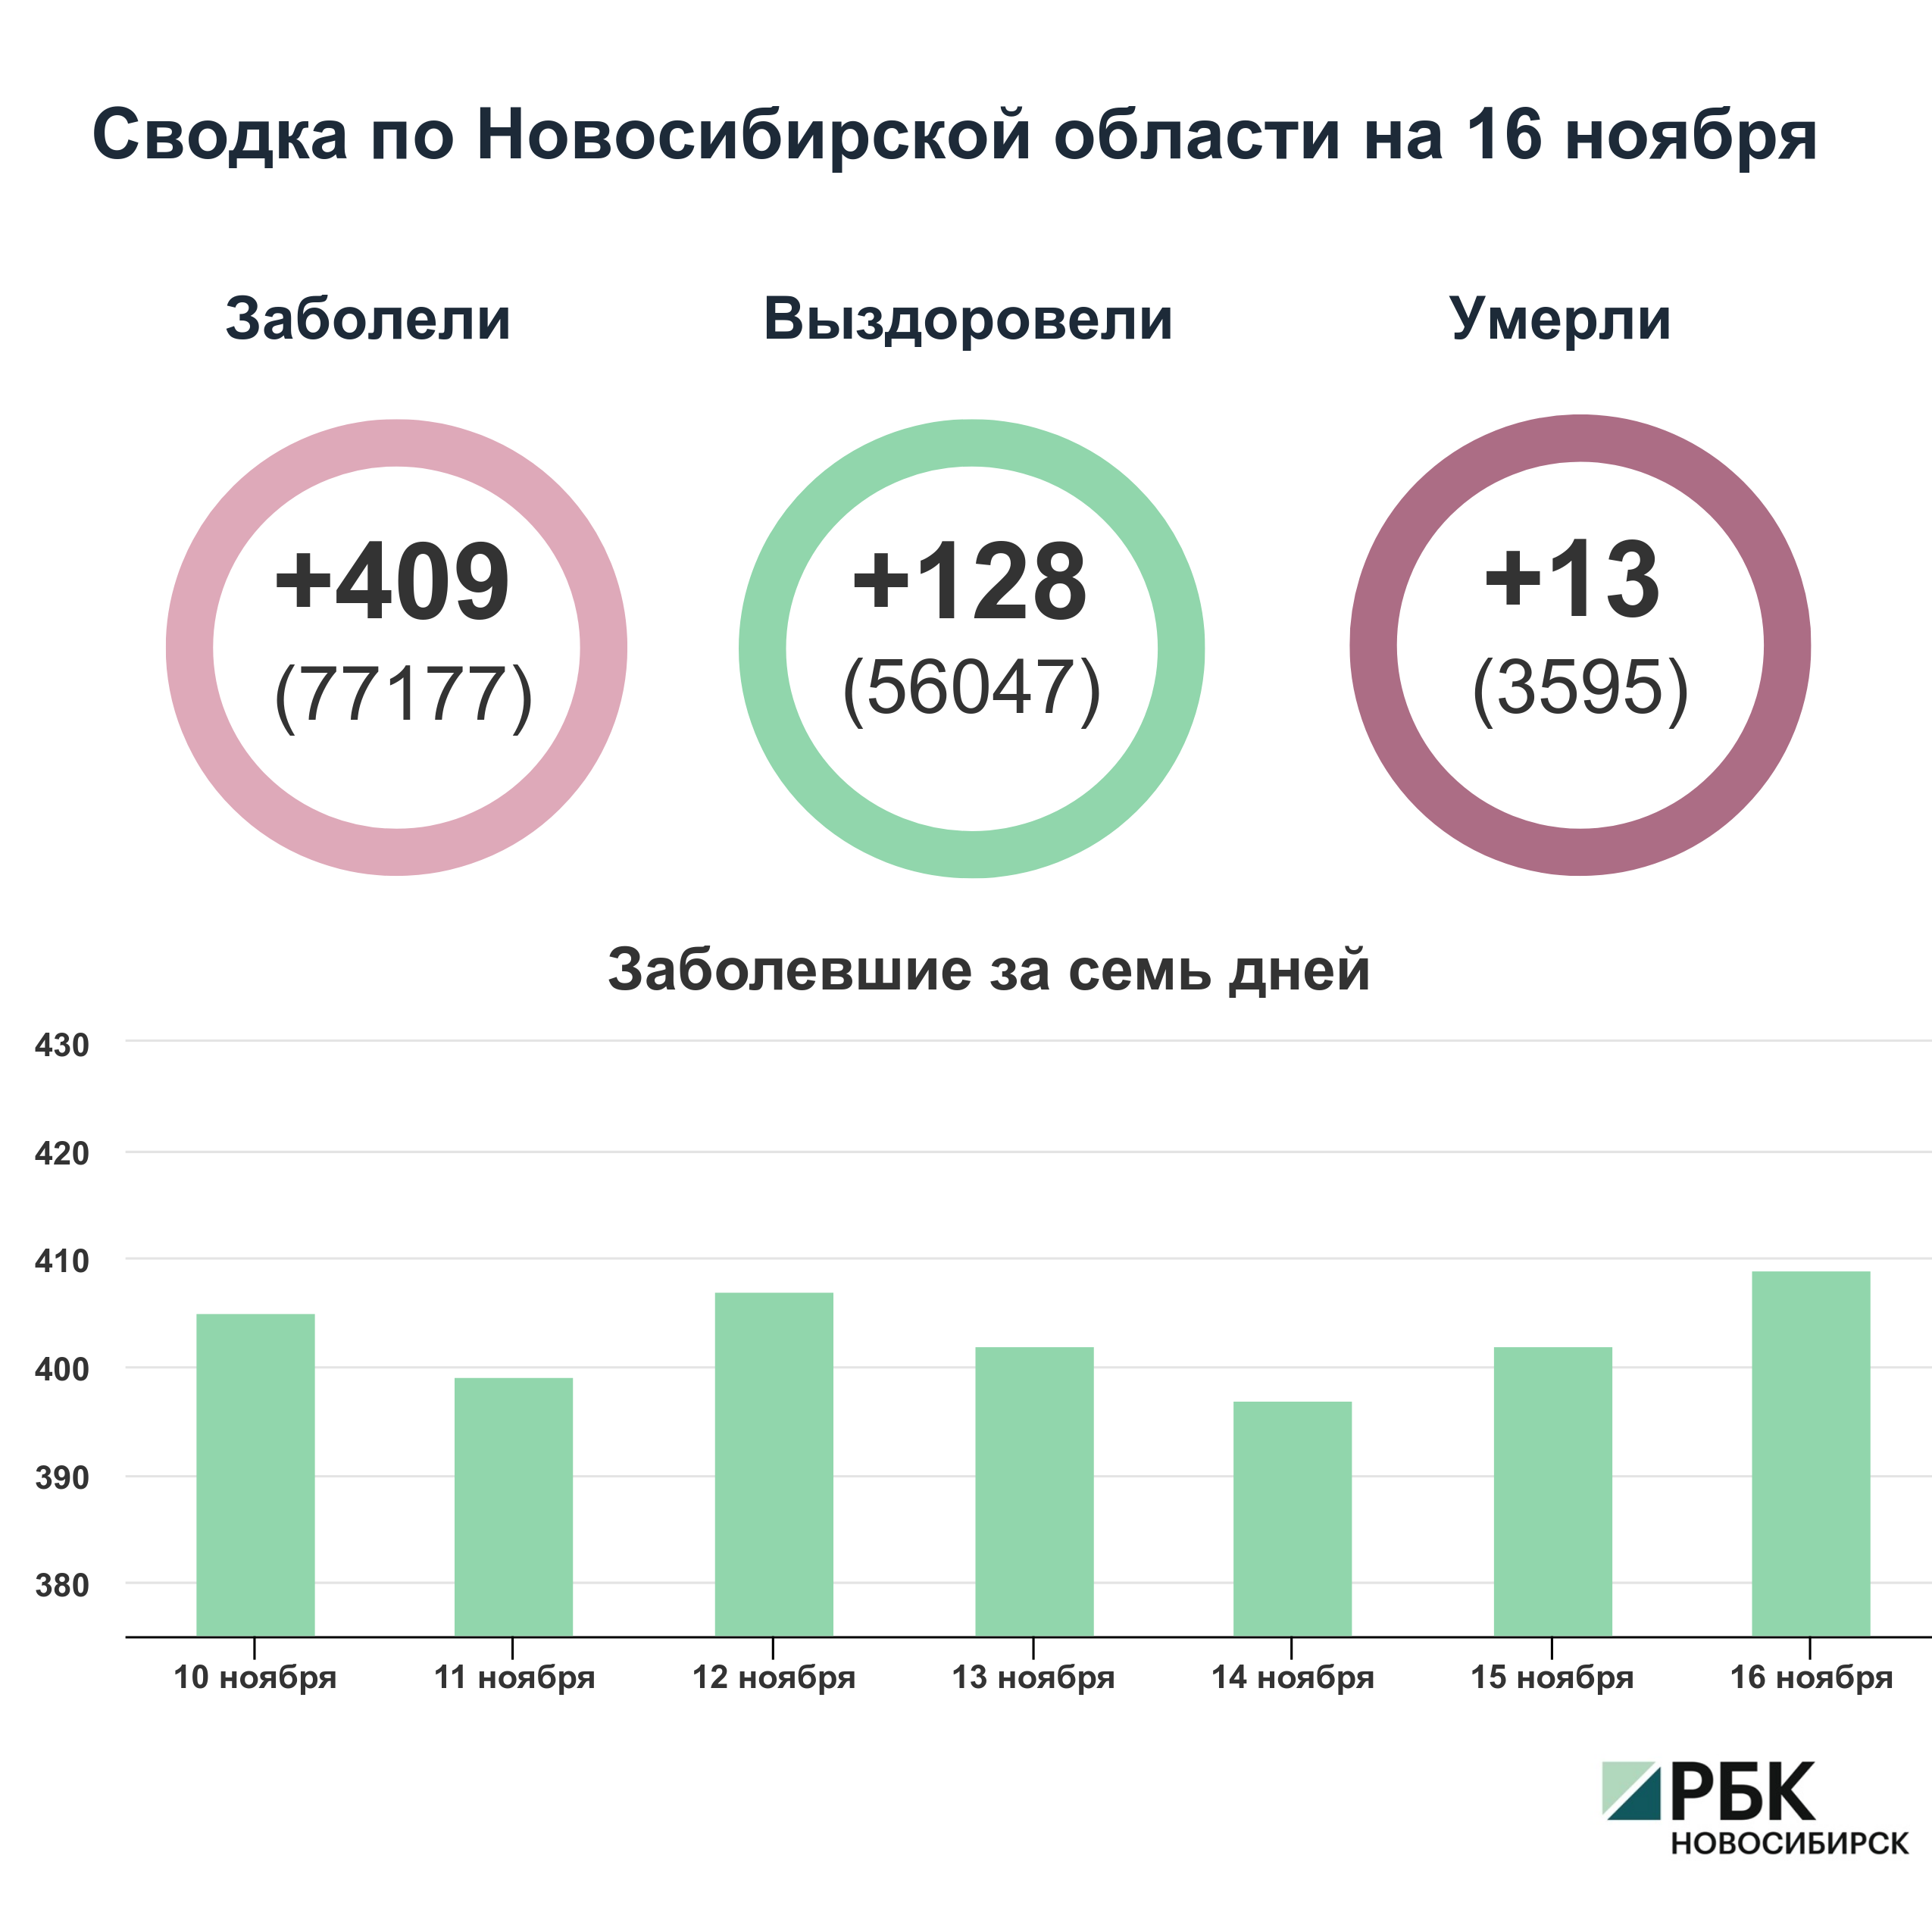 Коронавирус в Новосибирске: сводка на 16 ноября